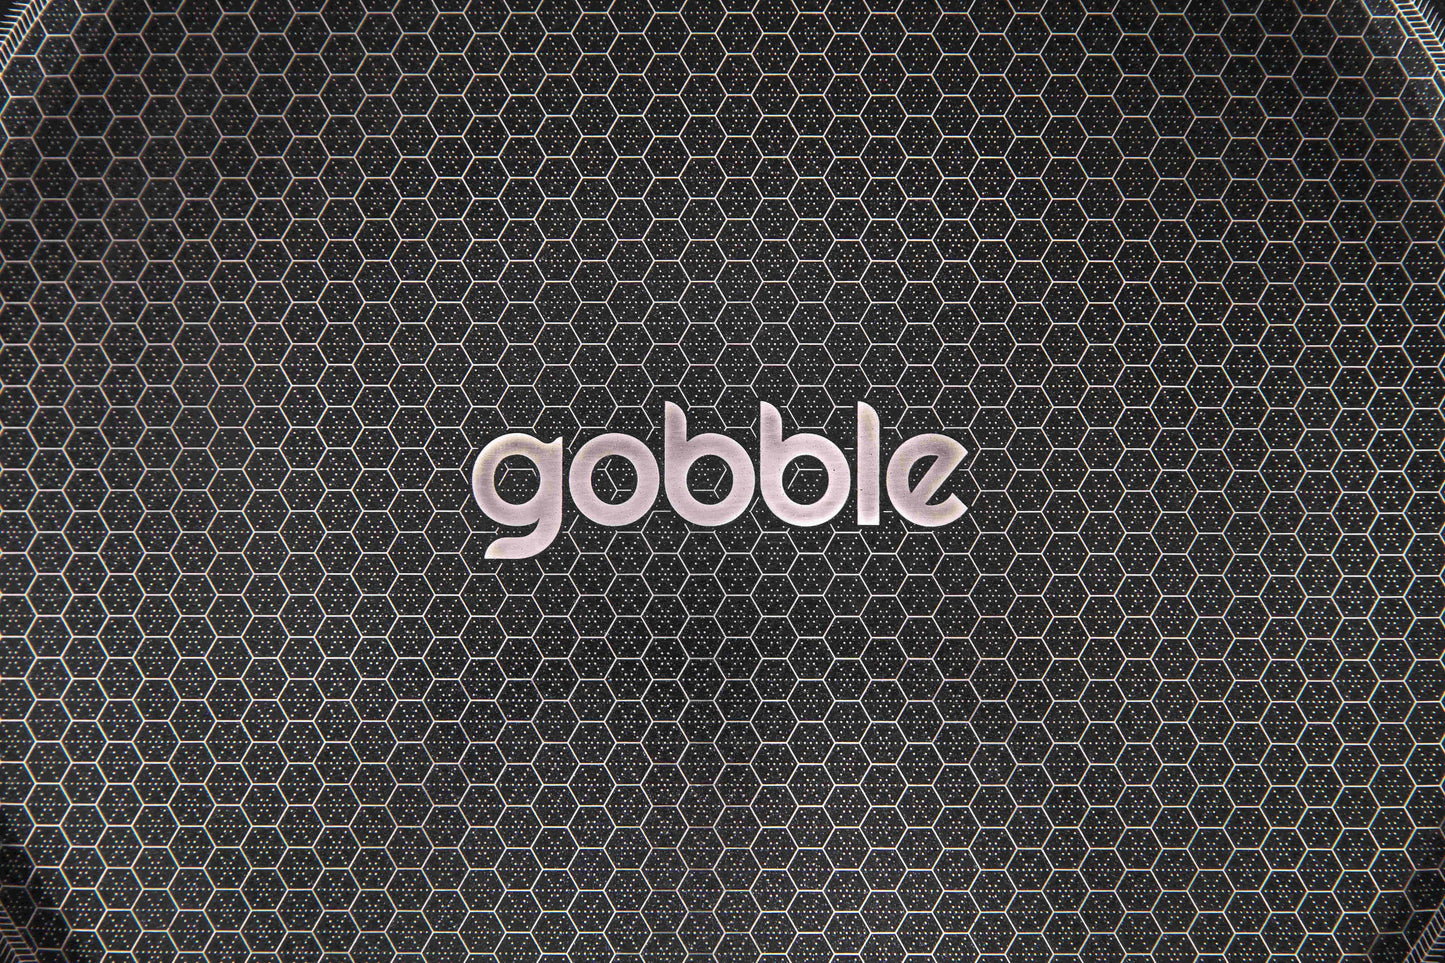 Gobble Tri-Ply Stainless Steel Honeycomb Tawa 28 cm diameter